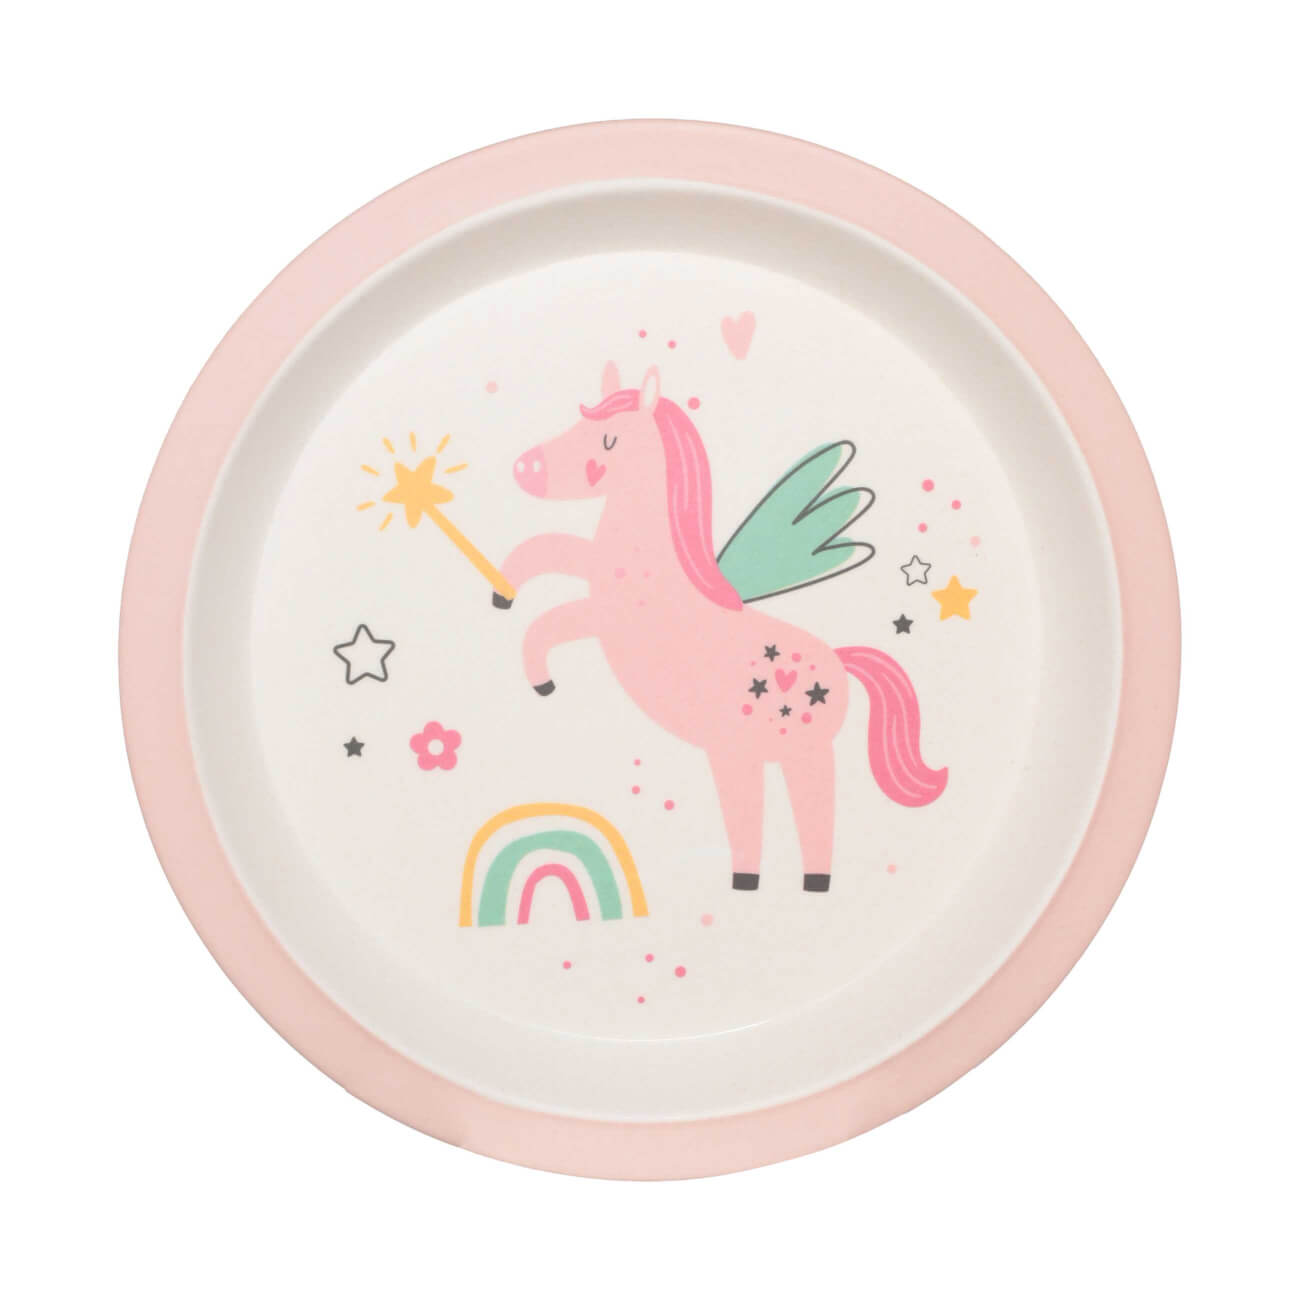 тарелка закусочная maxwell Тарелка закусочная, детская, 21 см, бамбук, розовая, Единорог и радуга, Unicorn